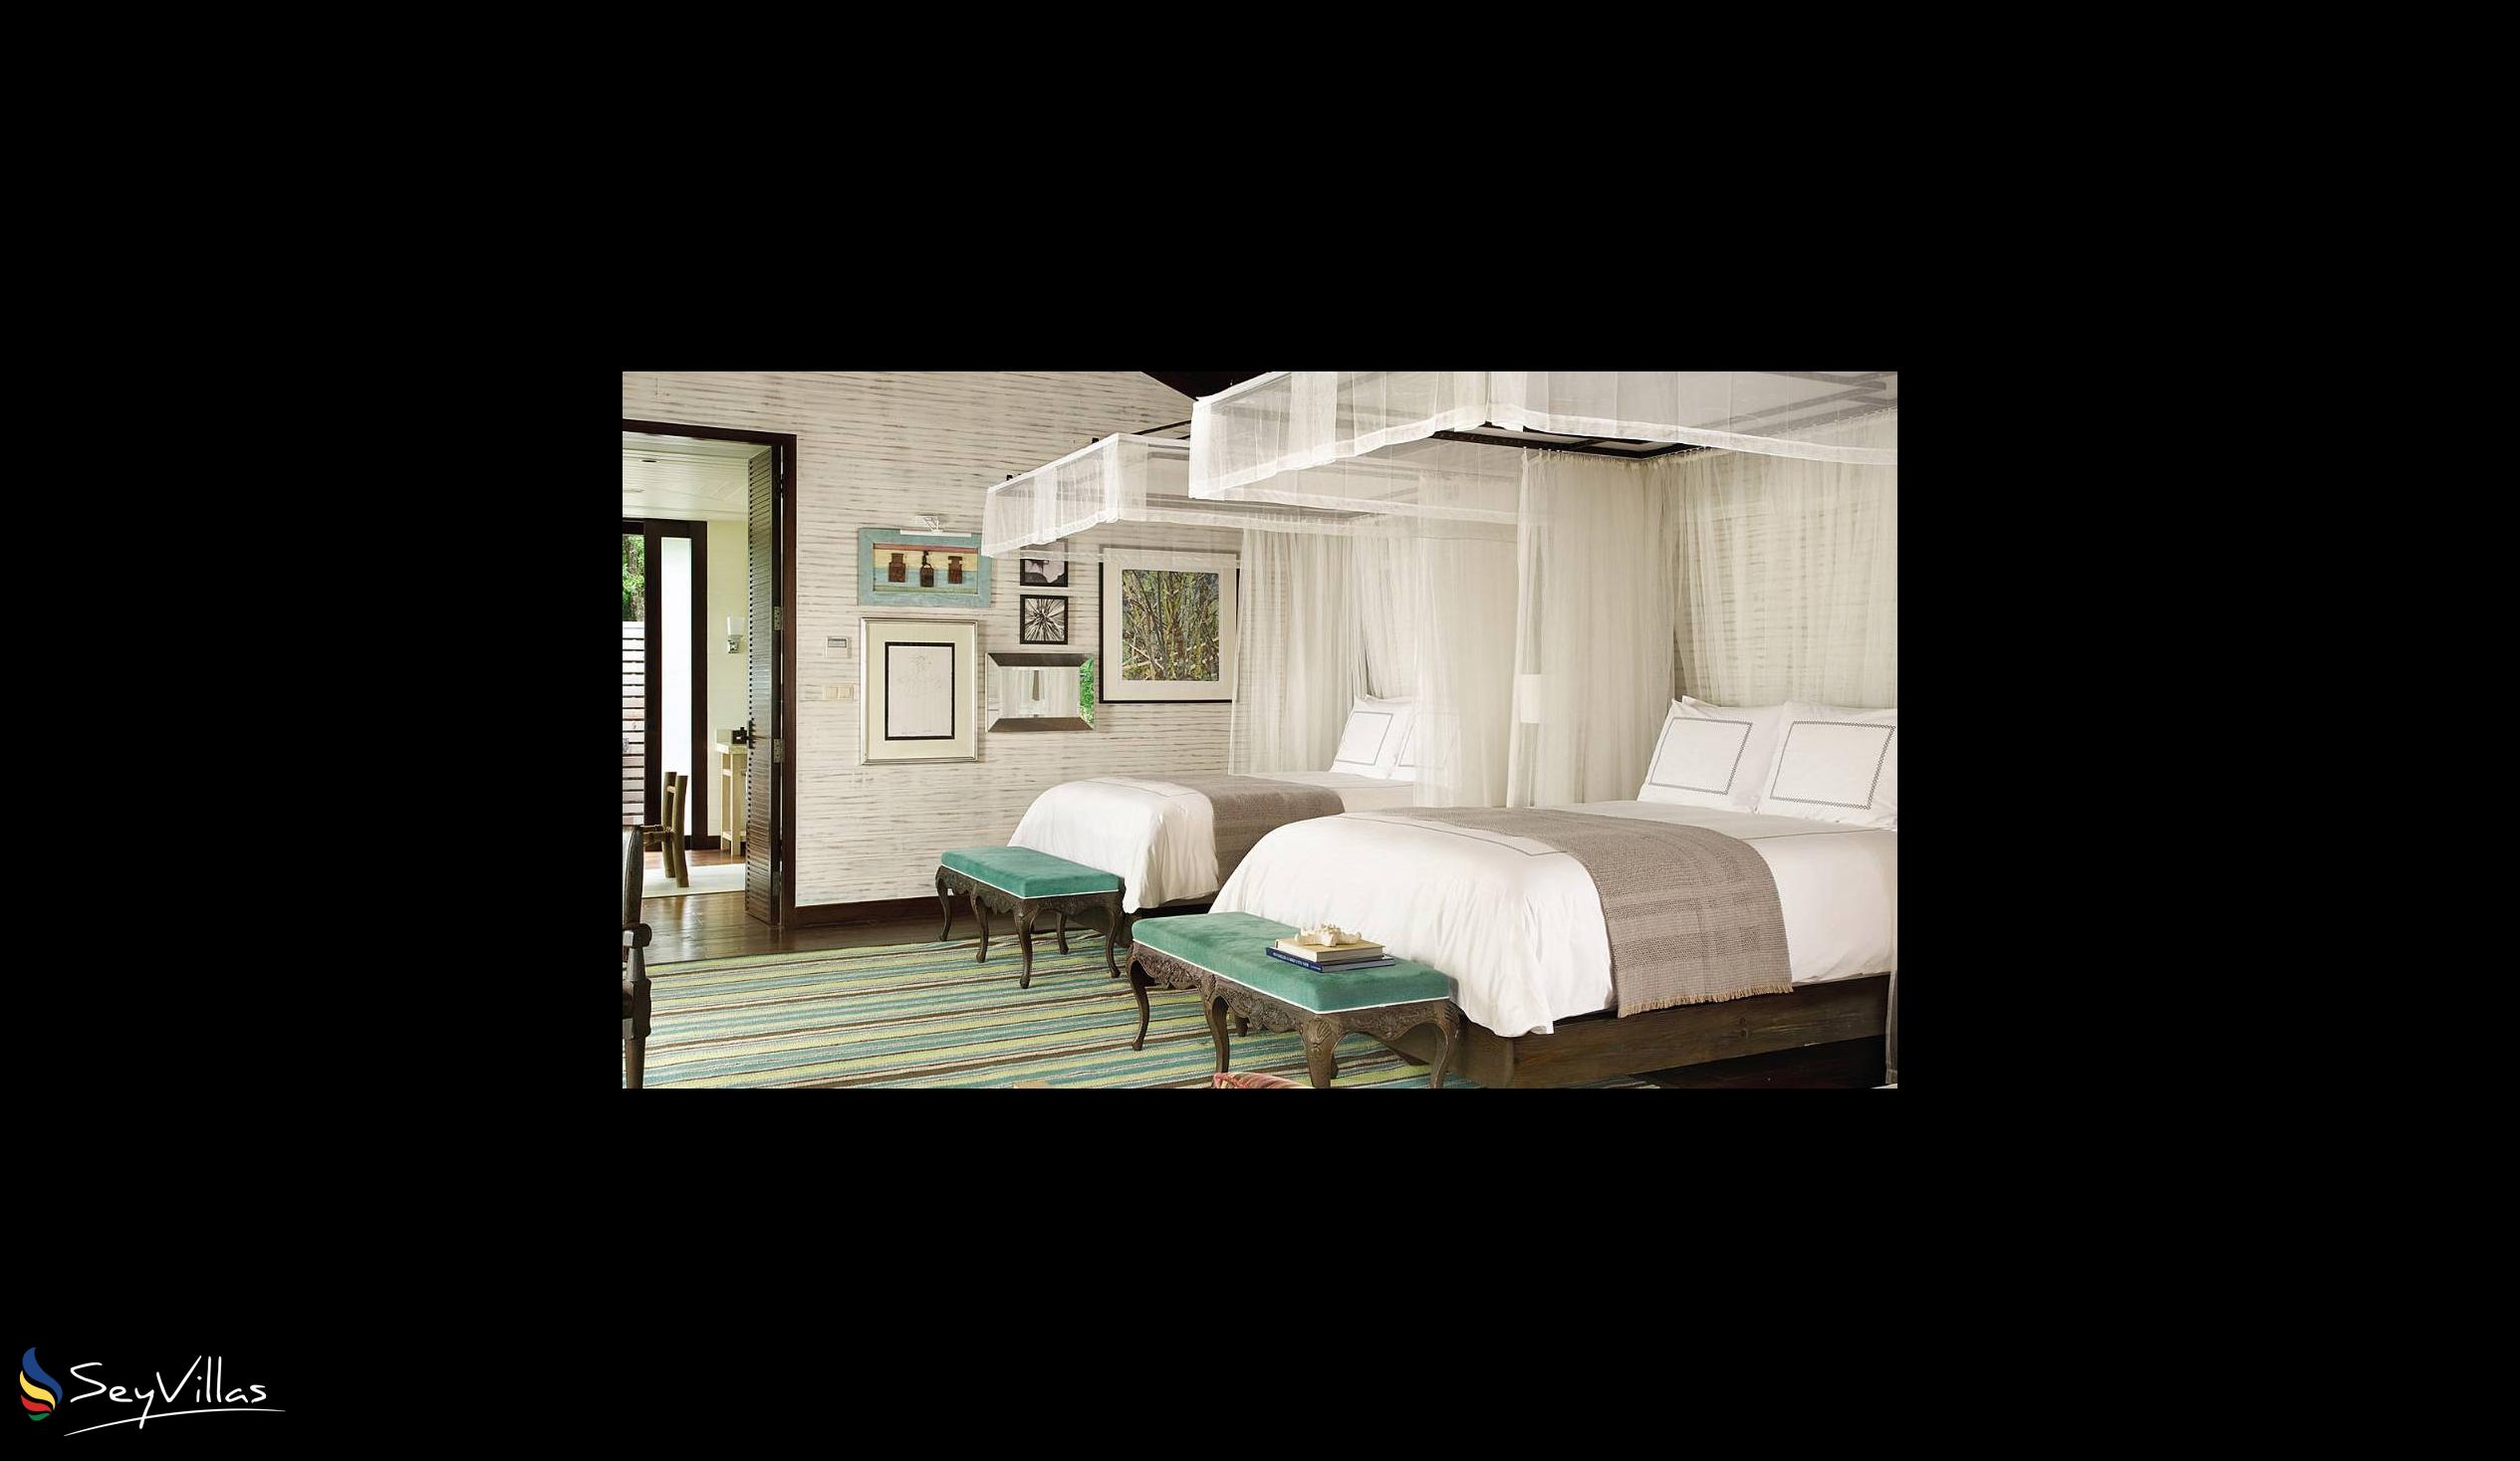 Photo 51: Four Seasons Resort - 2-Bedroom Hilltop Ocean View Suite - Mahé (Seychelles)